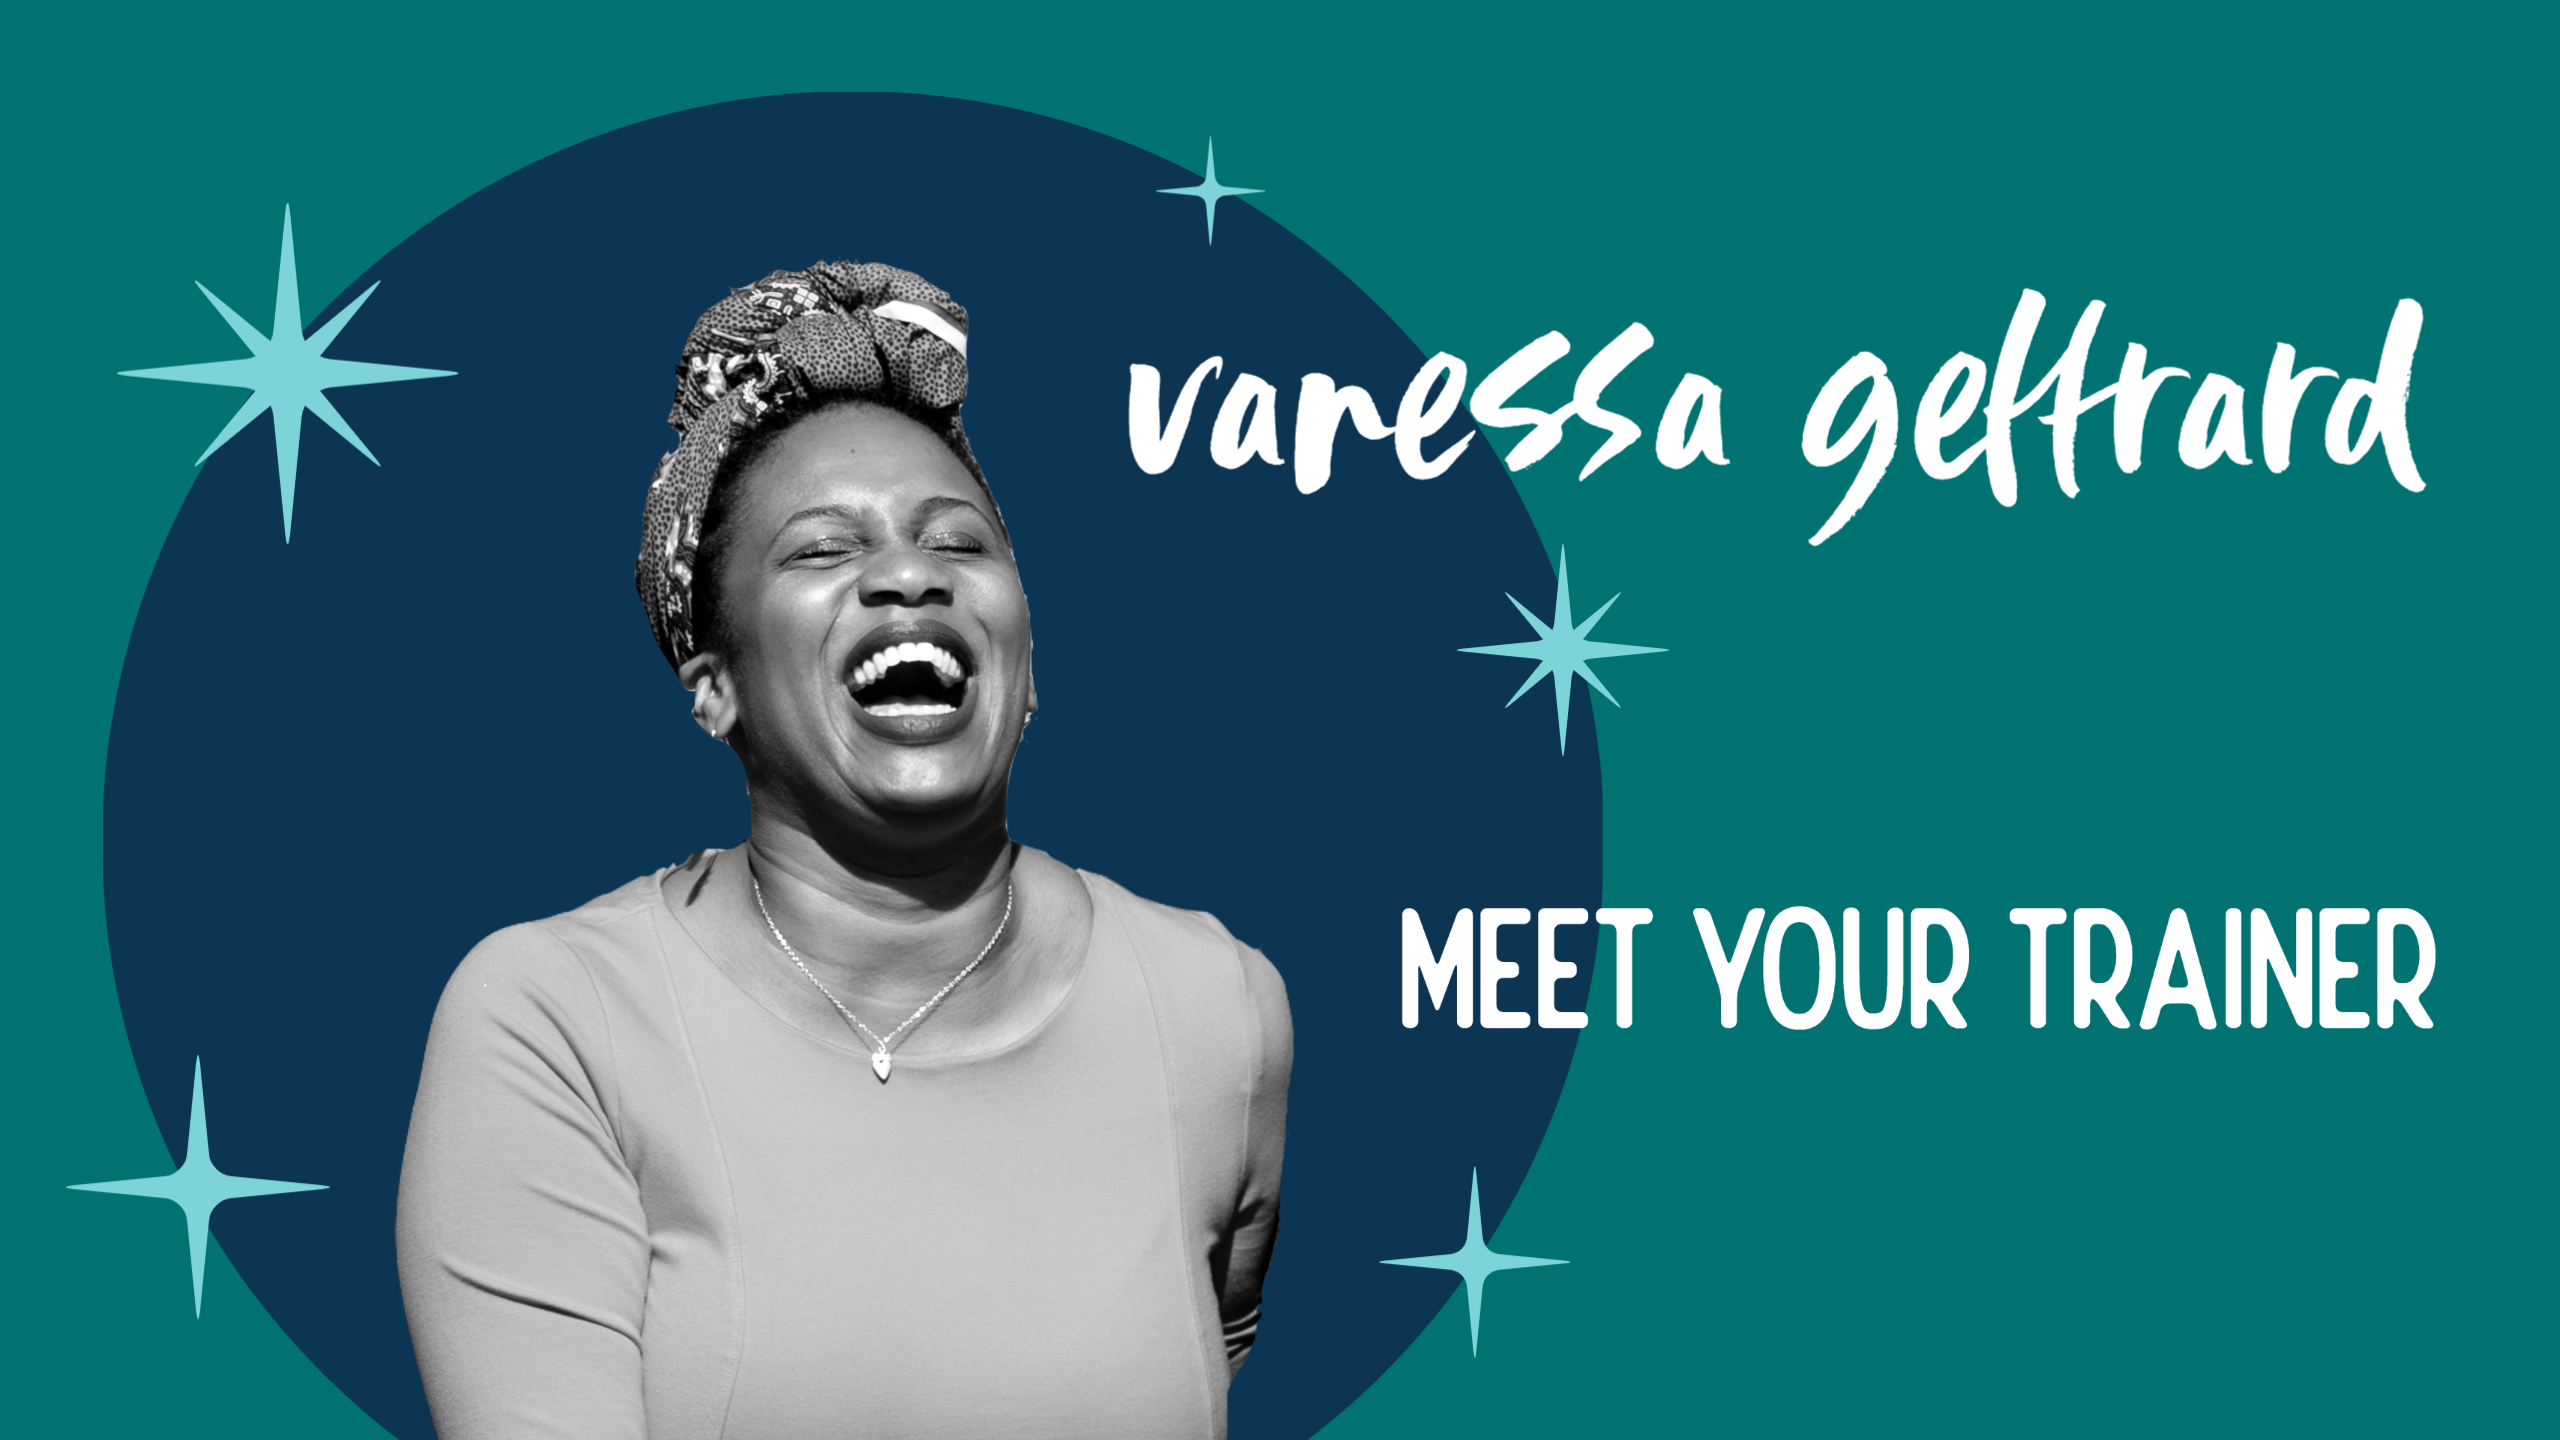 meet your trainer: Vanessa Geffrard